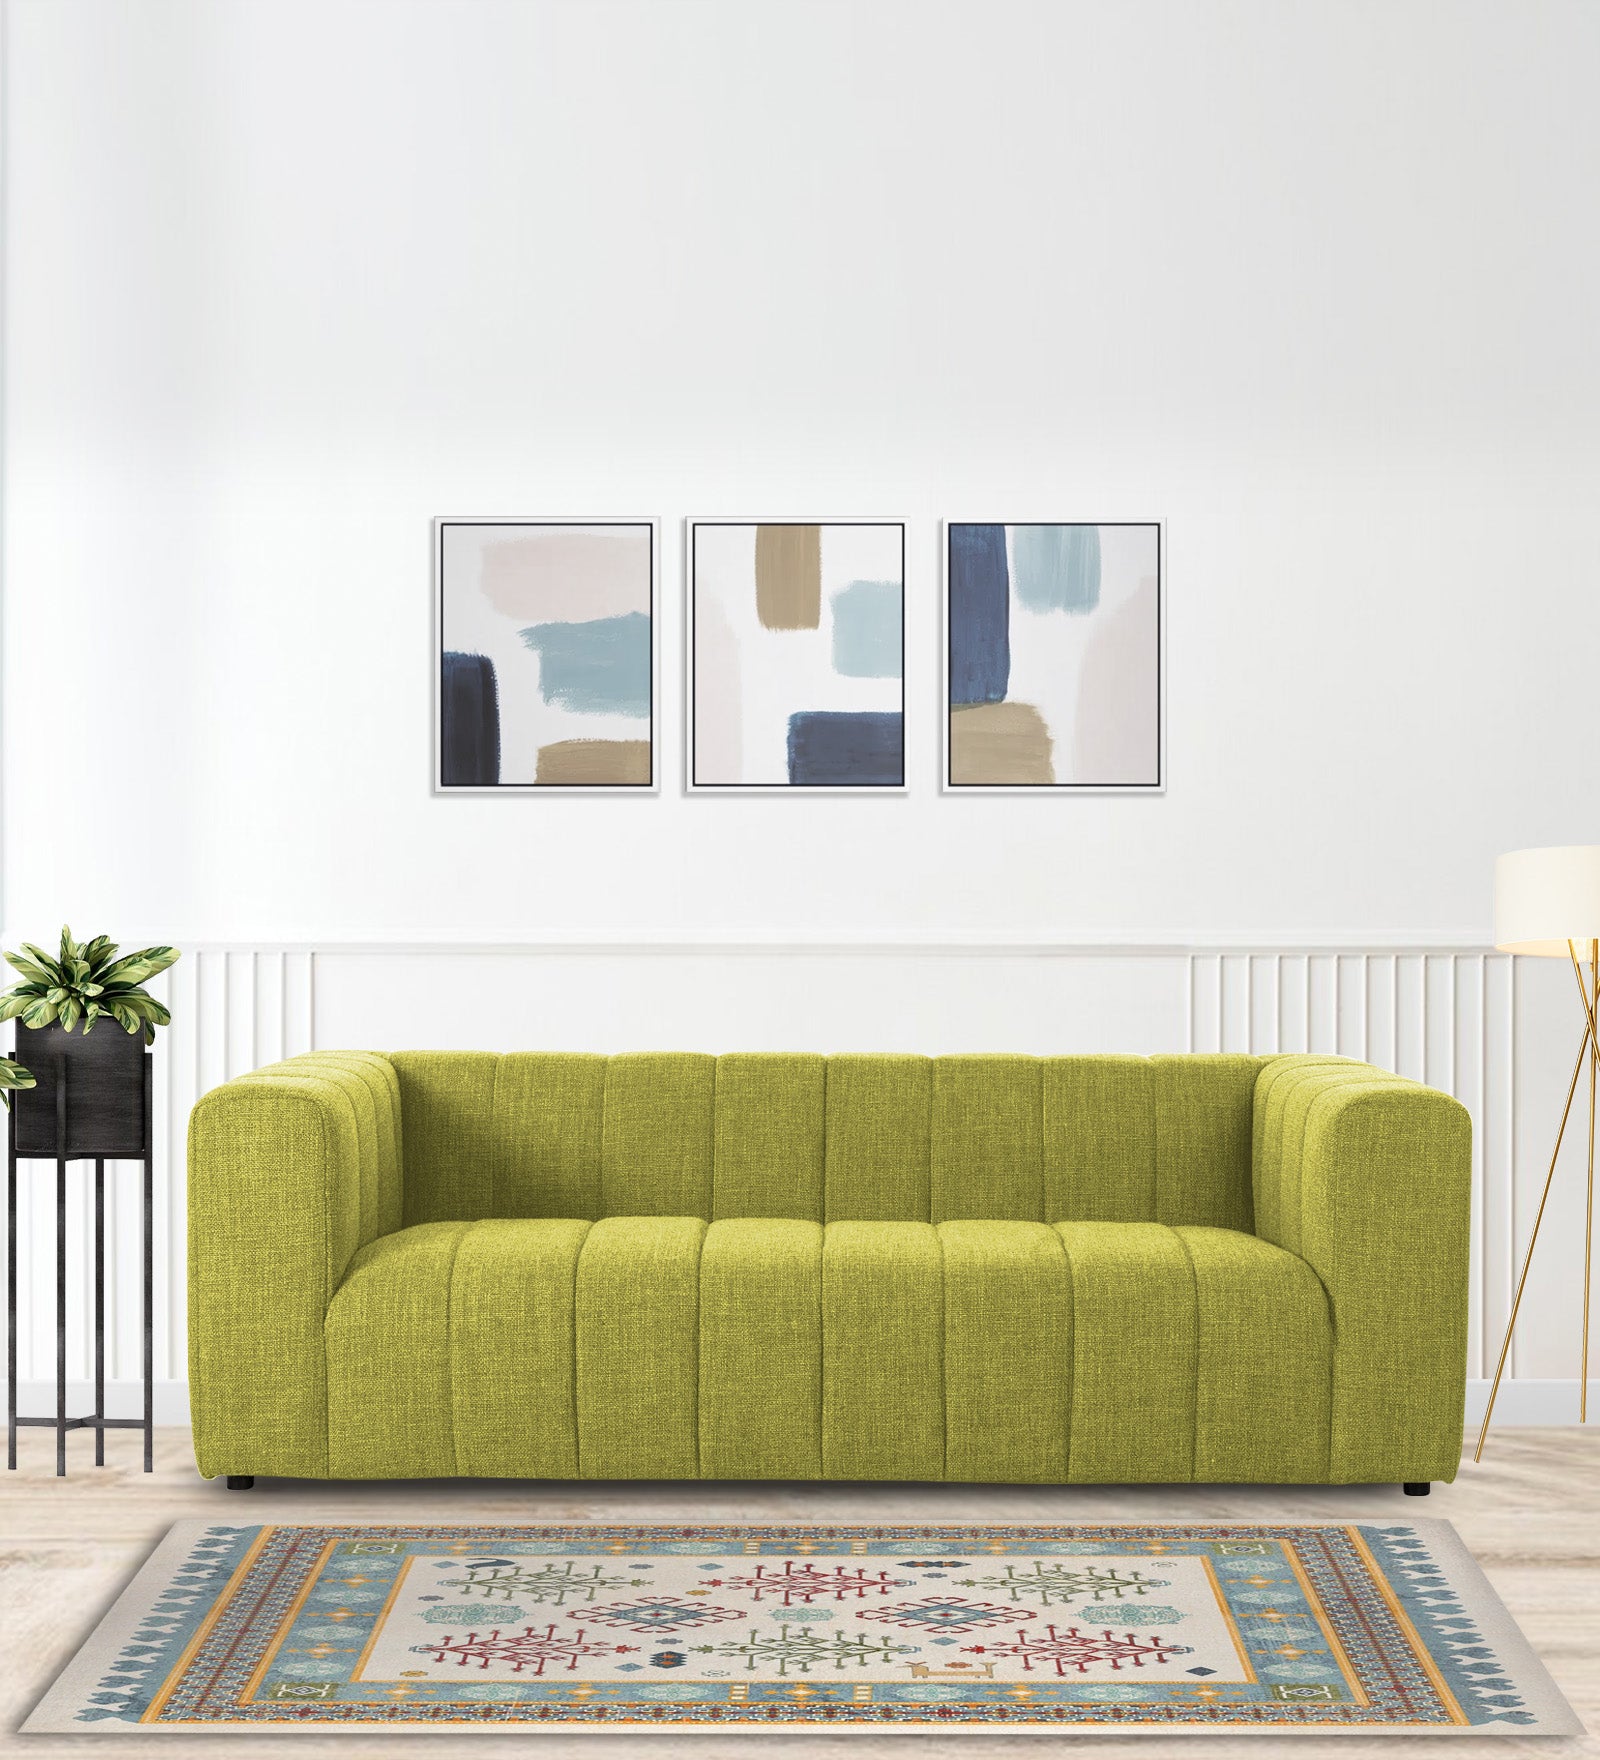 Lara Fabric 3 Seater Sofa in Parrot Green Colour